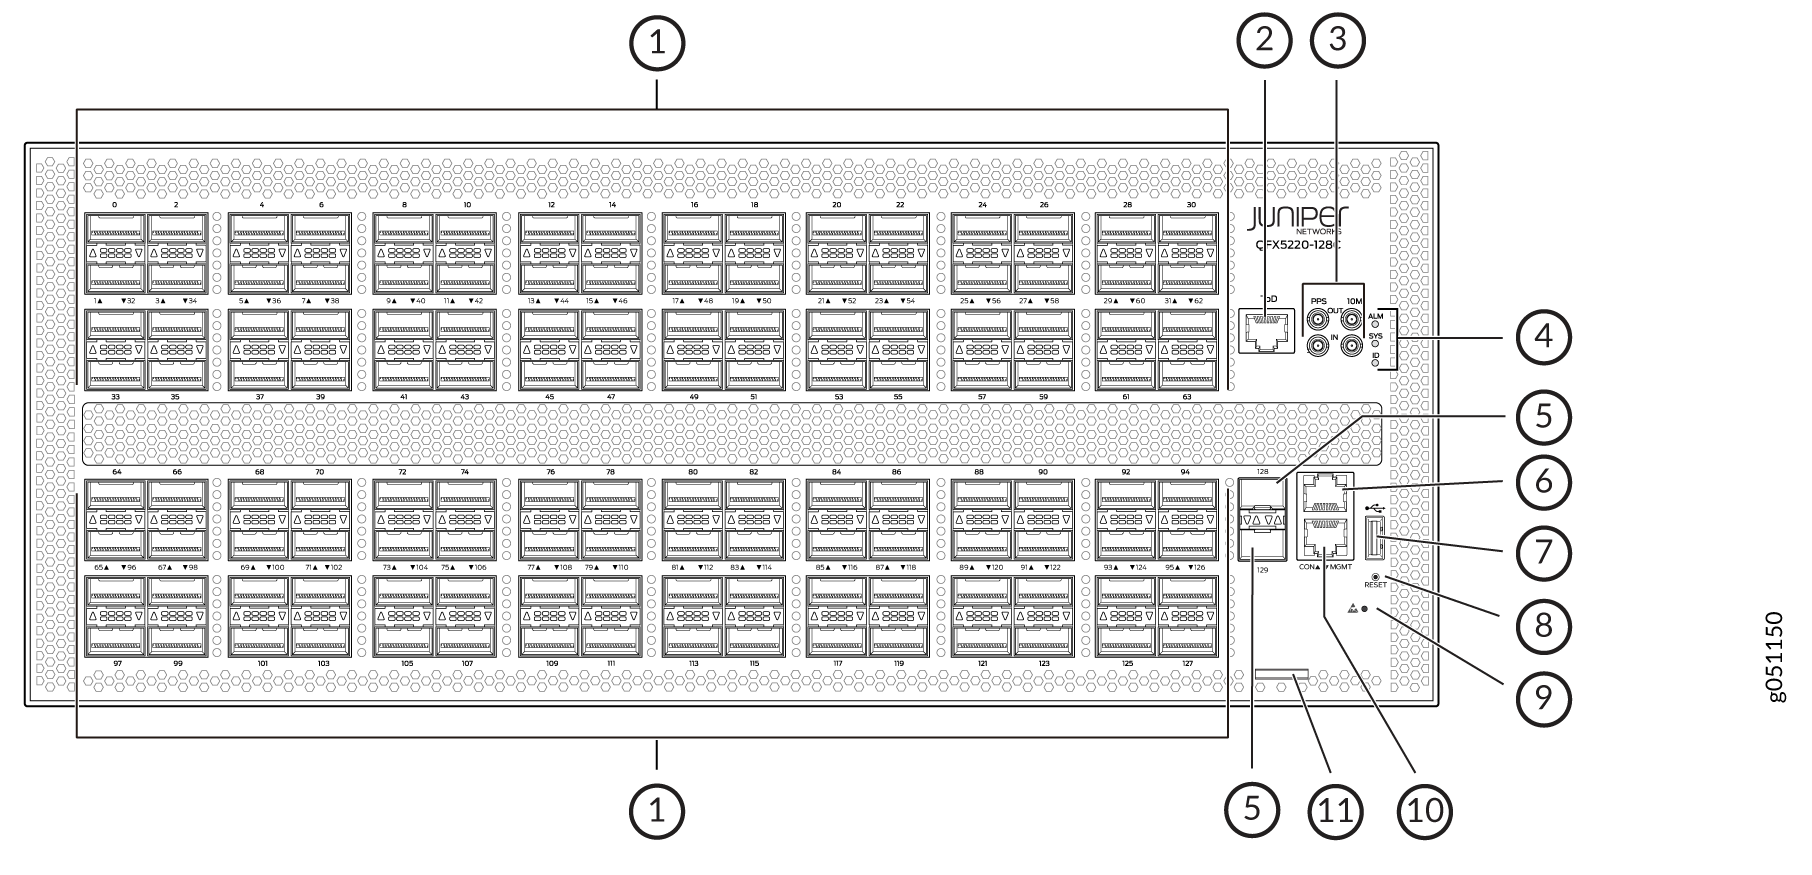 QFX5220-128C Port and Management Panels